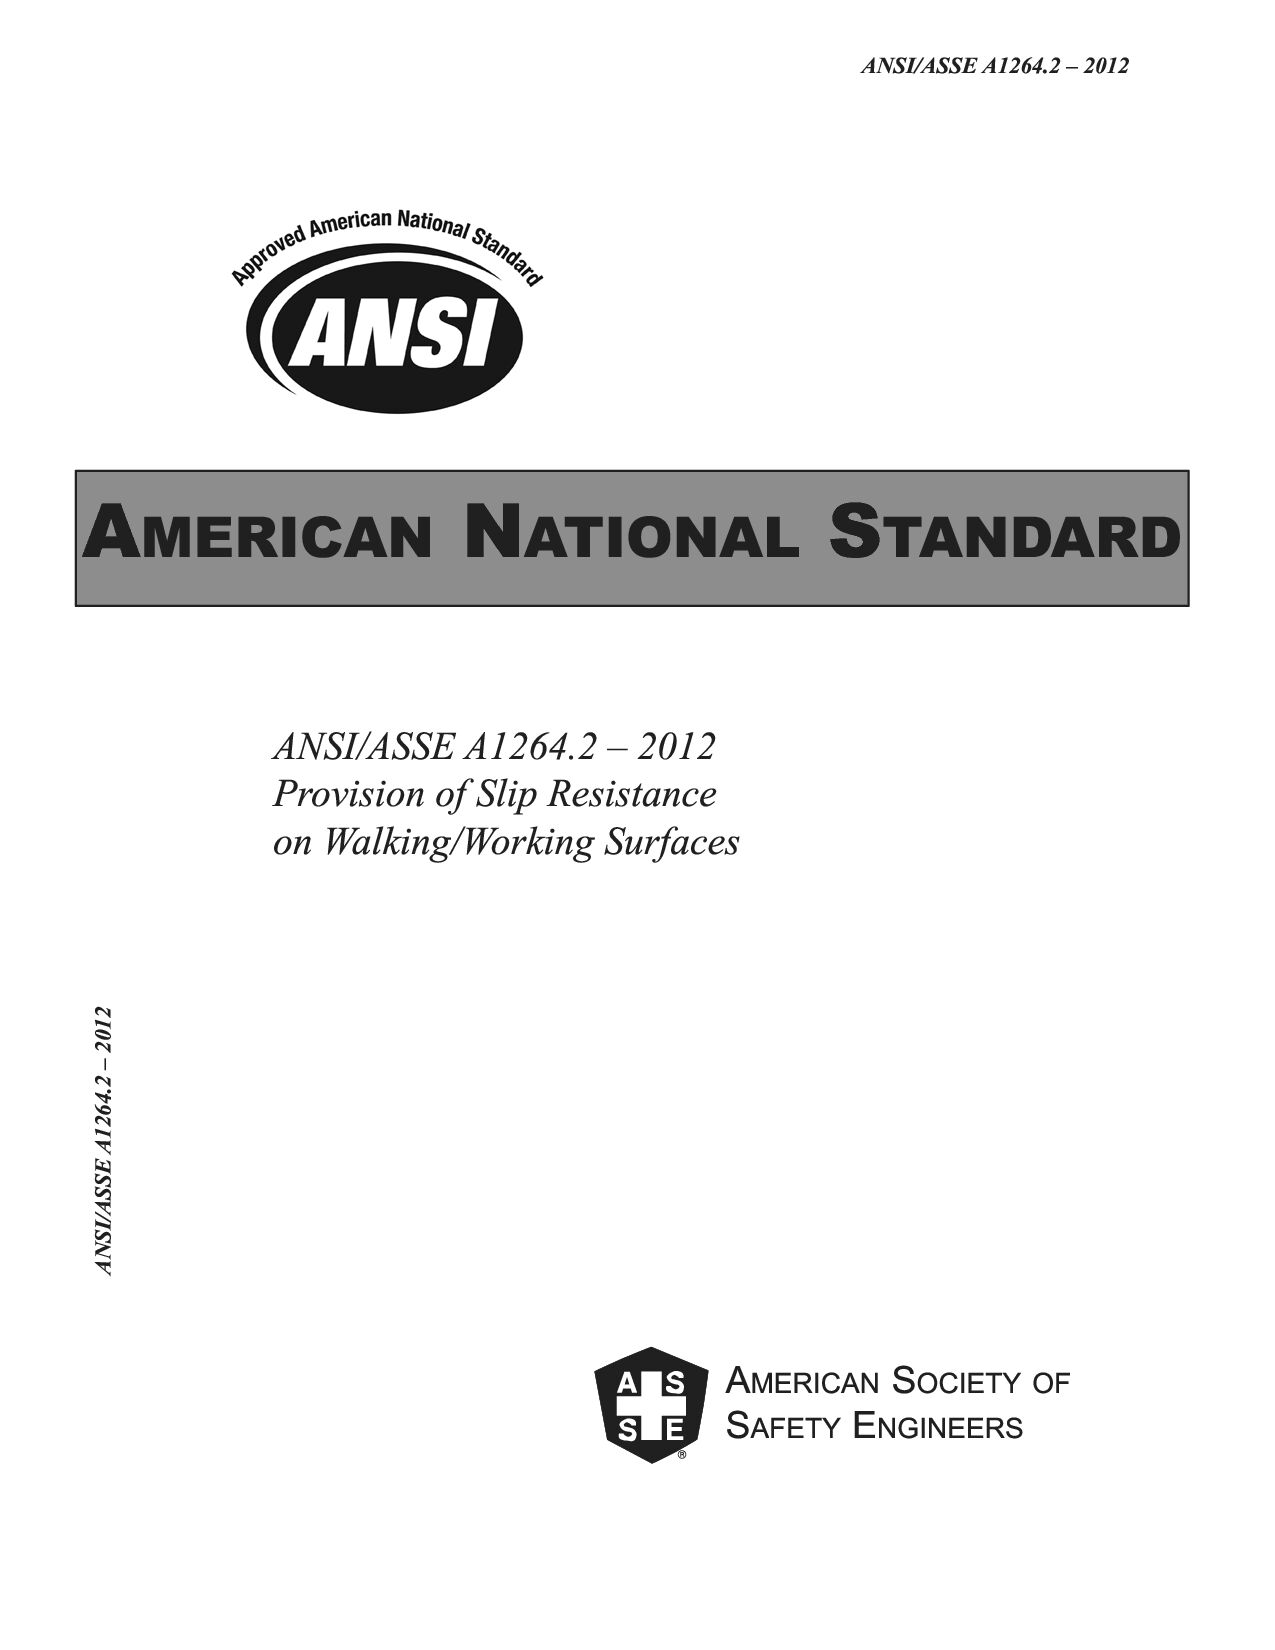 ANSI/ASSE A1264.2-2012